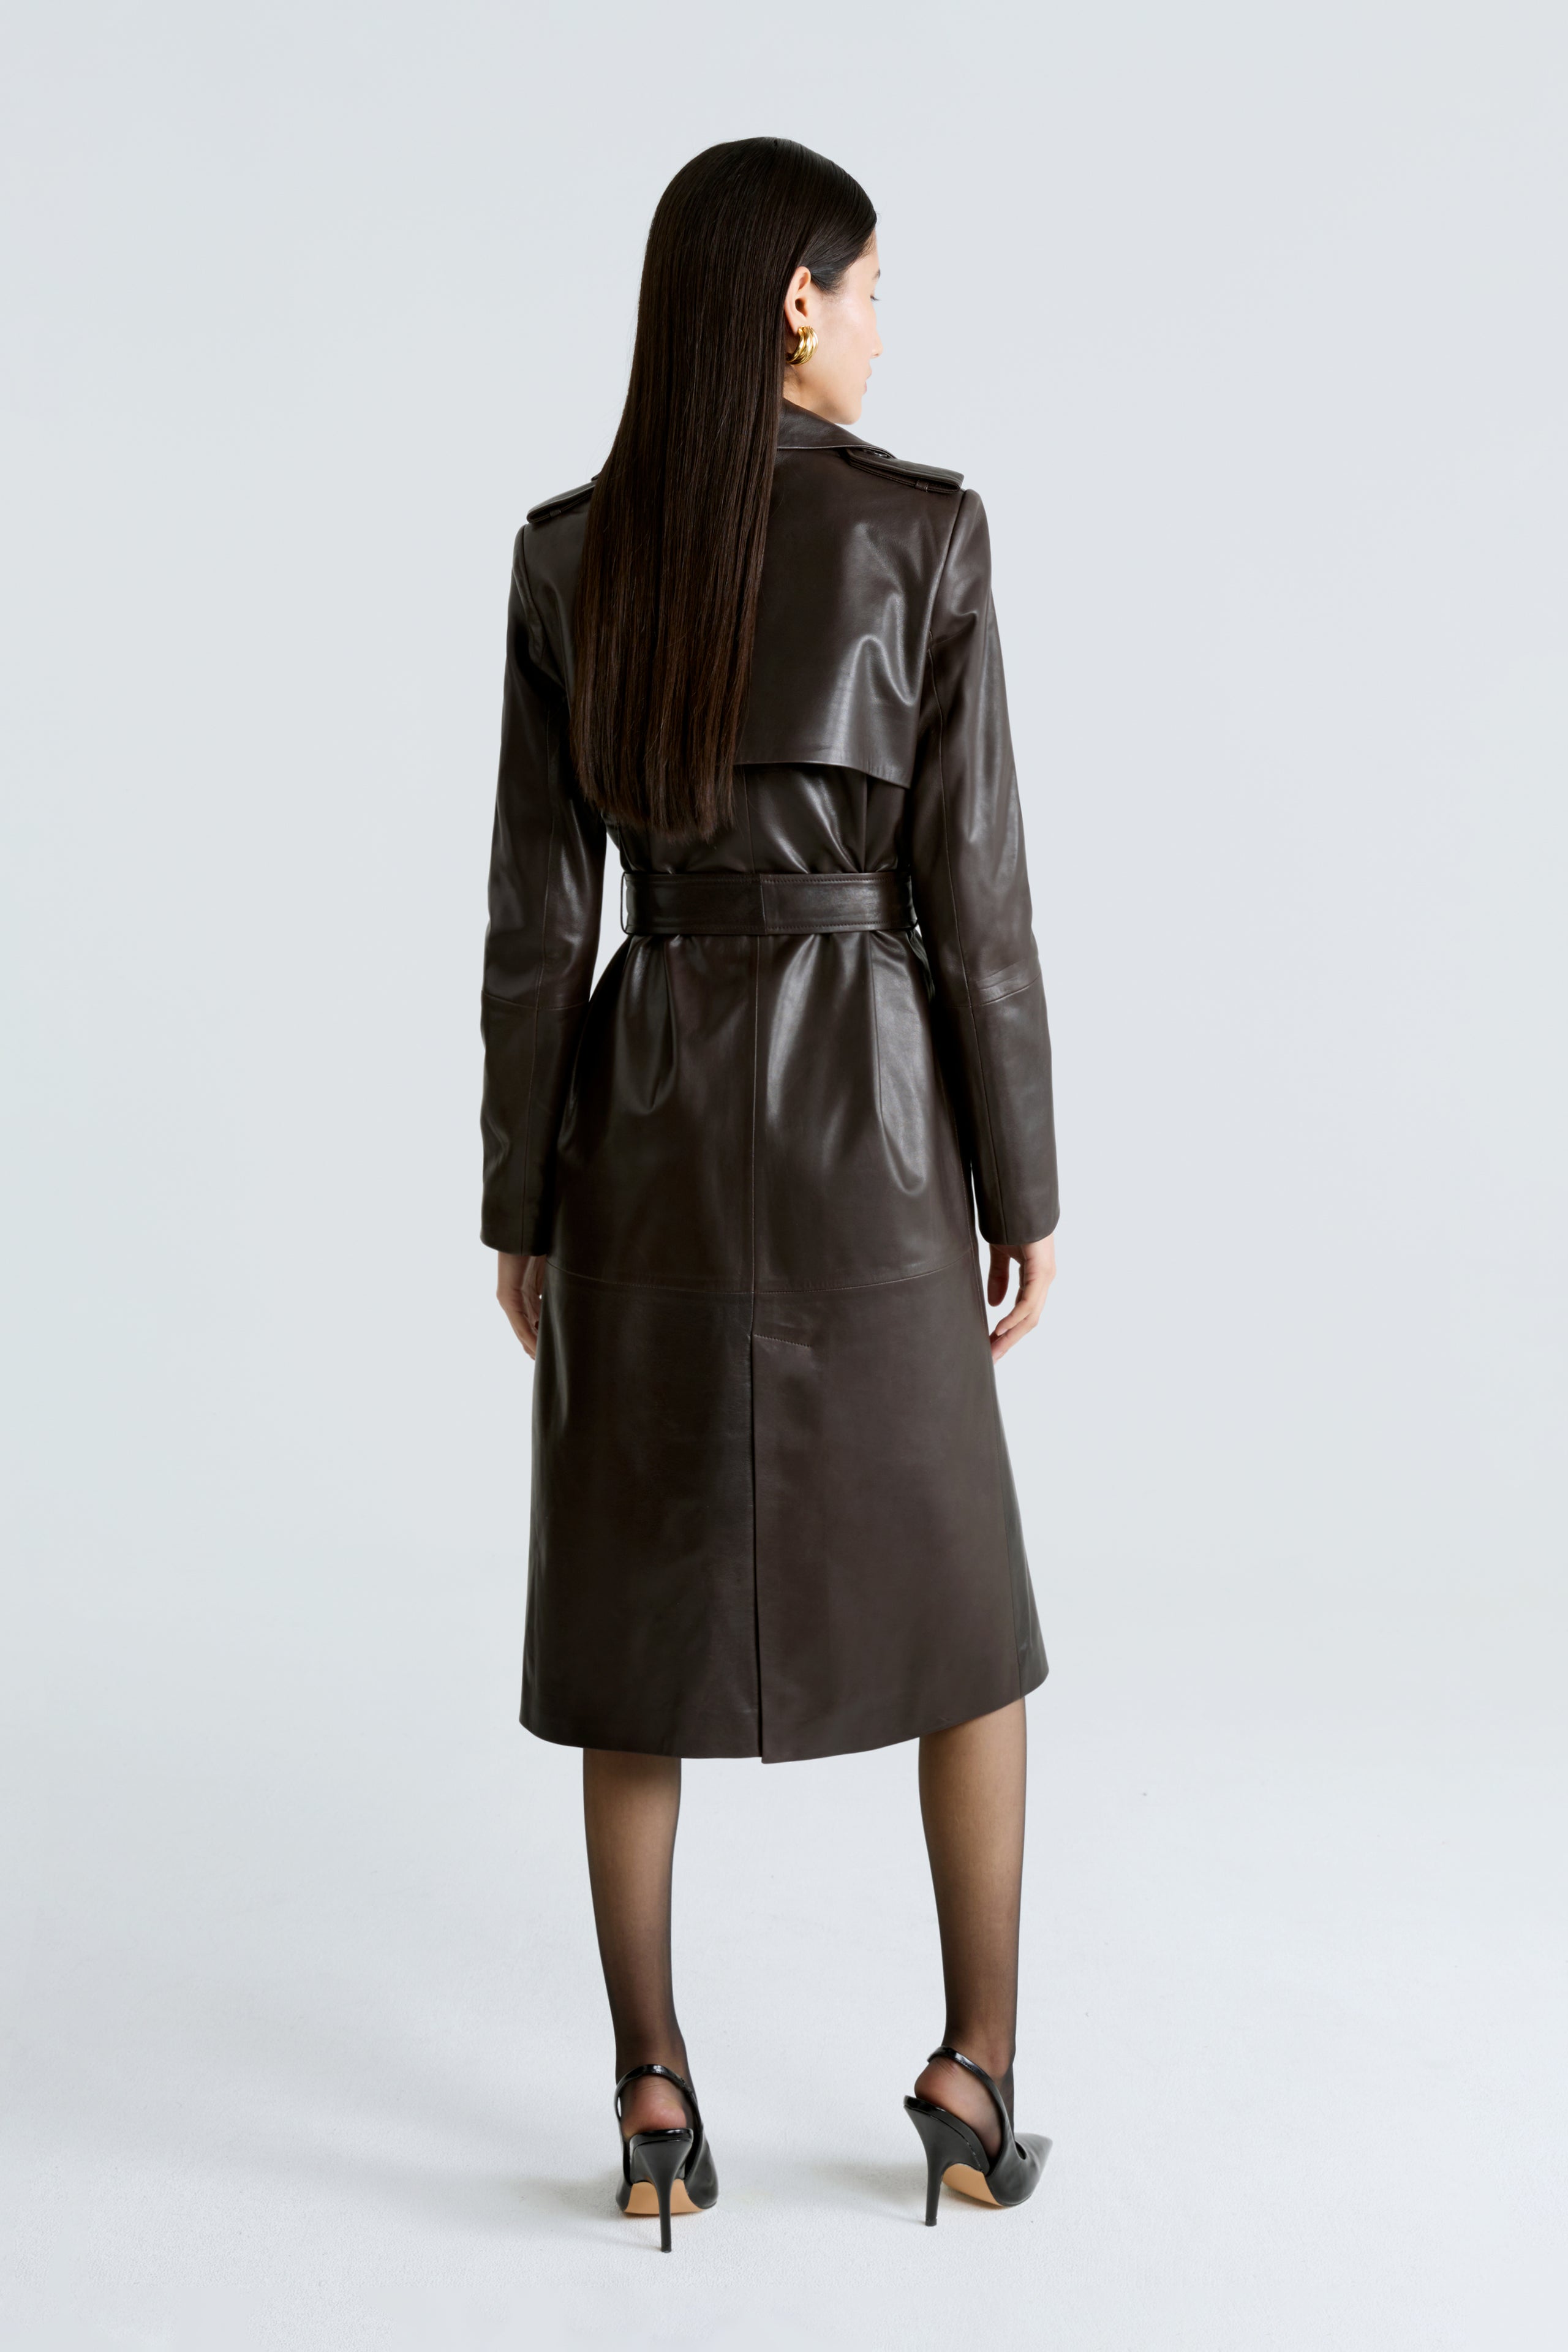 Model is wearing the Marla Chocolat Fondant Belted Leather Coat Back